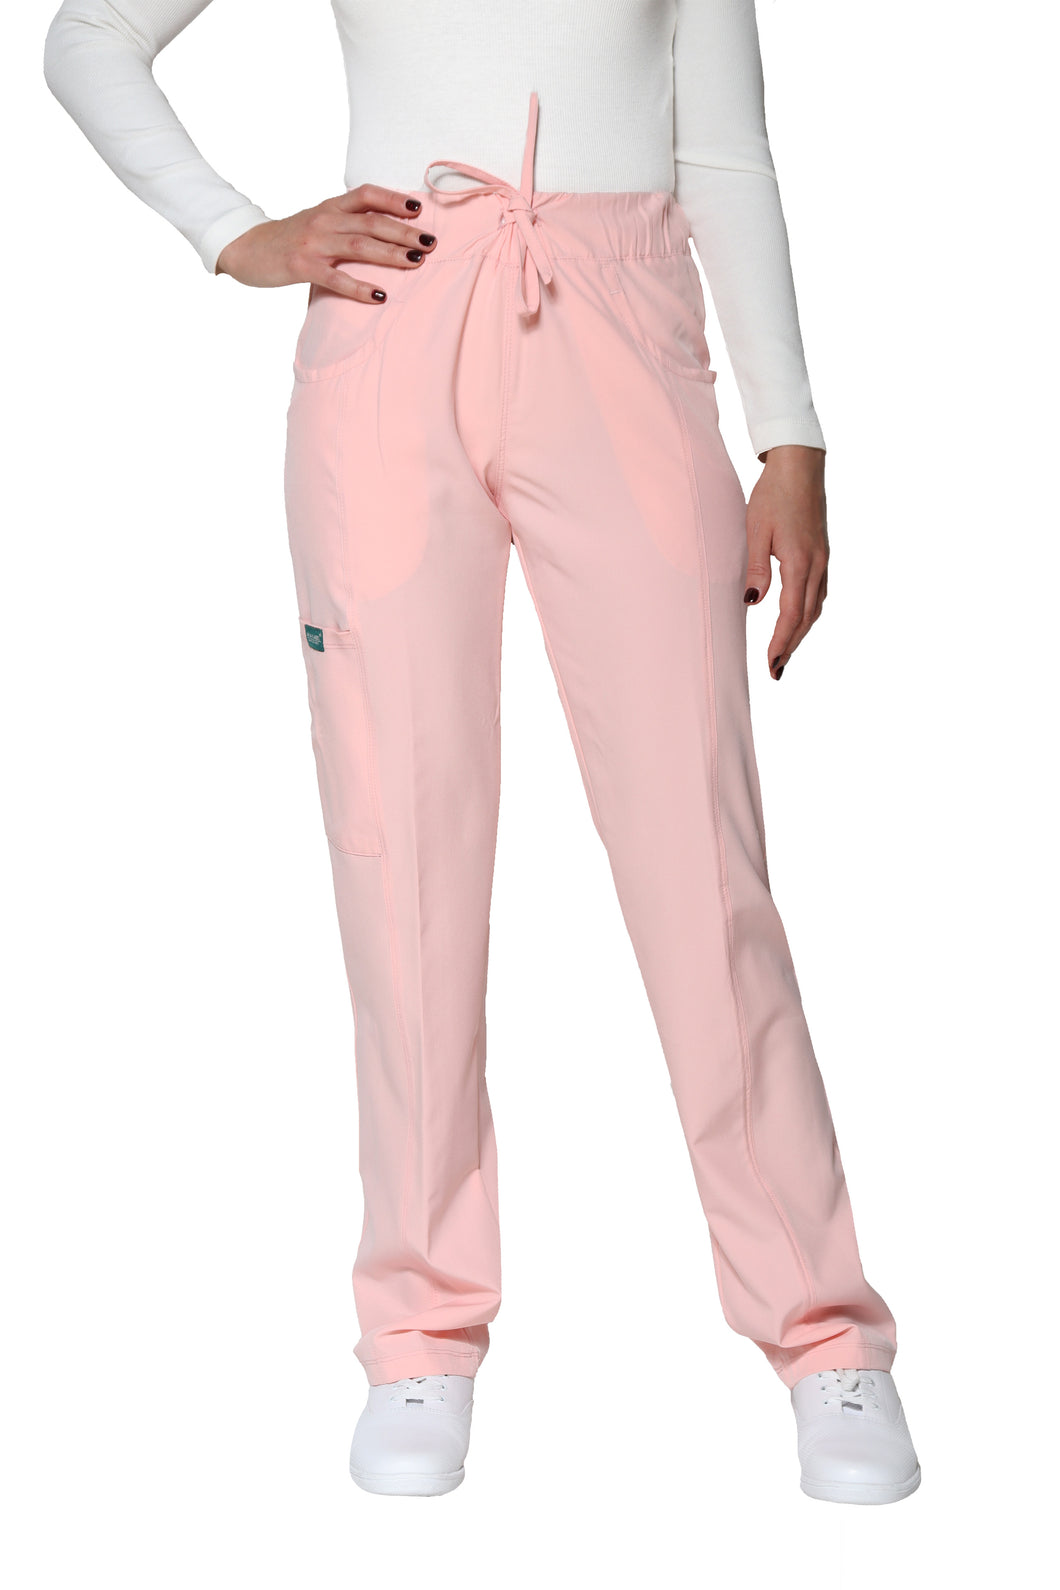 Pantalón Pant EV-120 REPELENTE A FLUIDOS-Color ROSA PASTEL Dama-Ana Isabel Uniformes